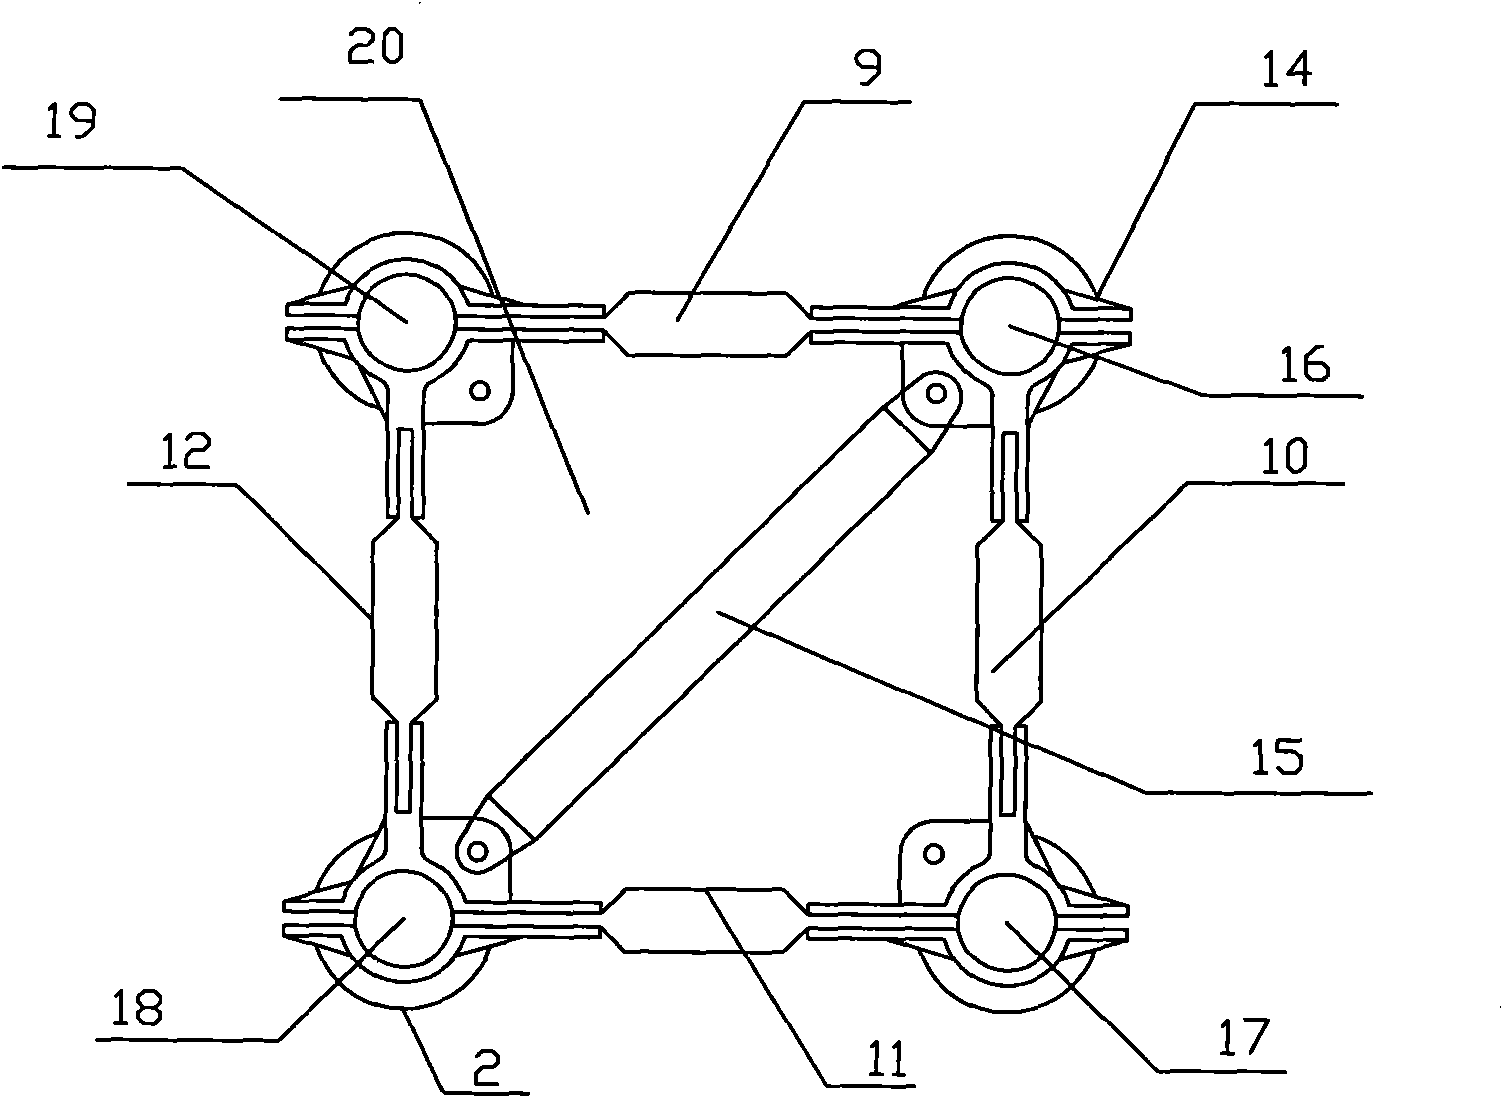 750 kv lattice composite cross-arm insulator